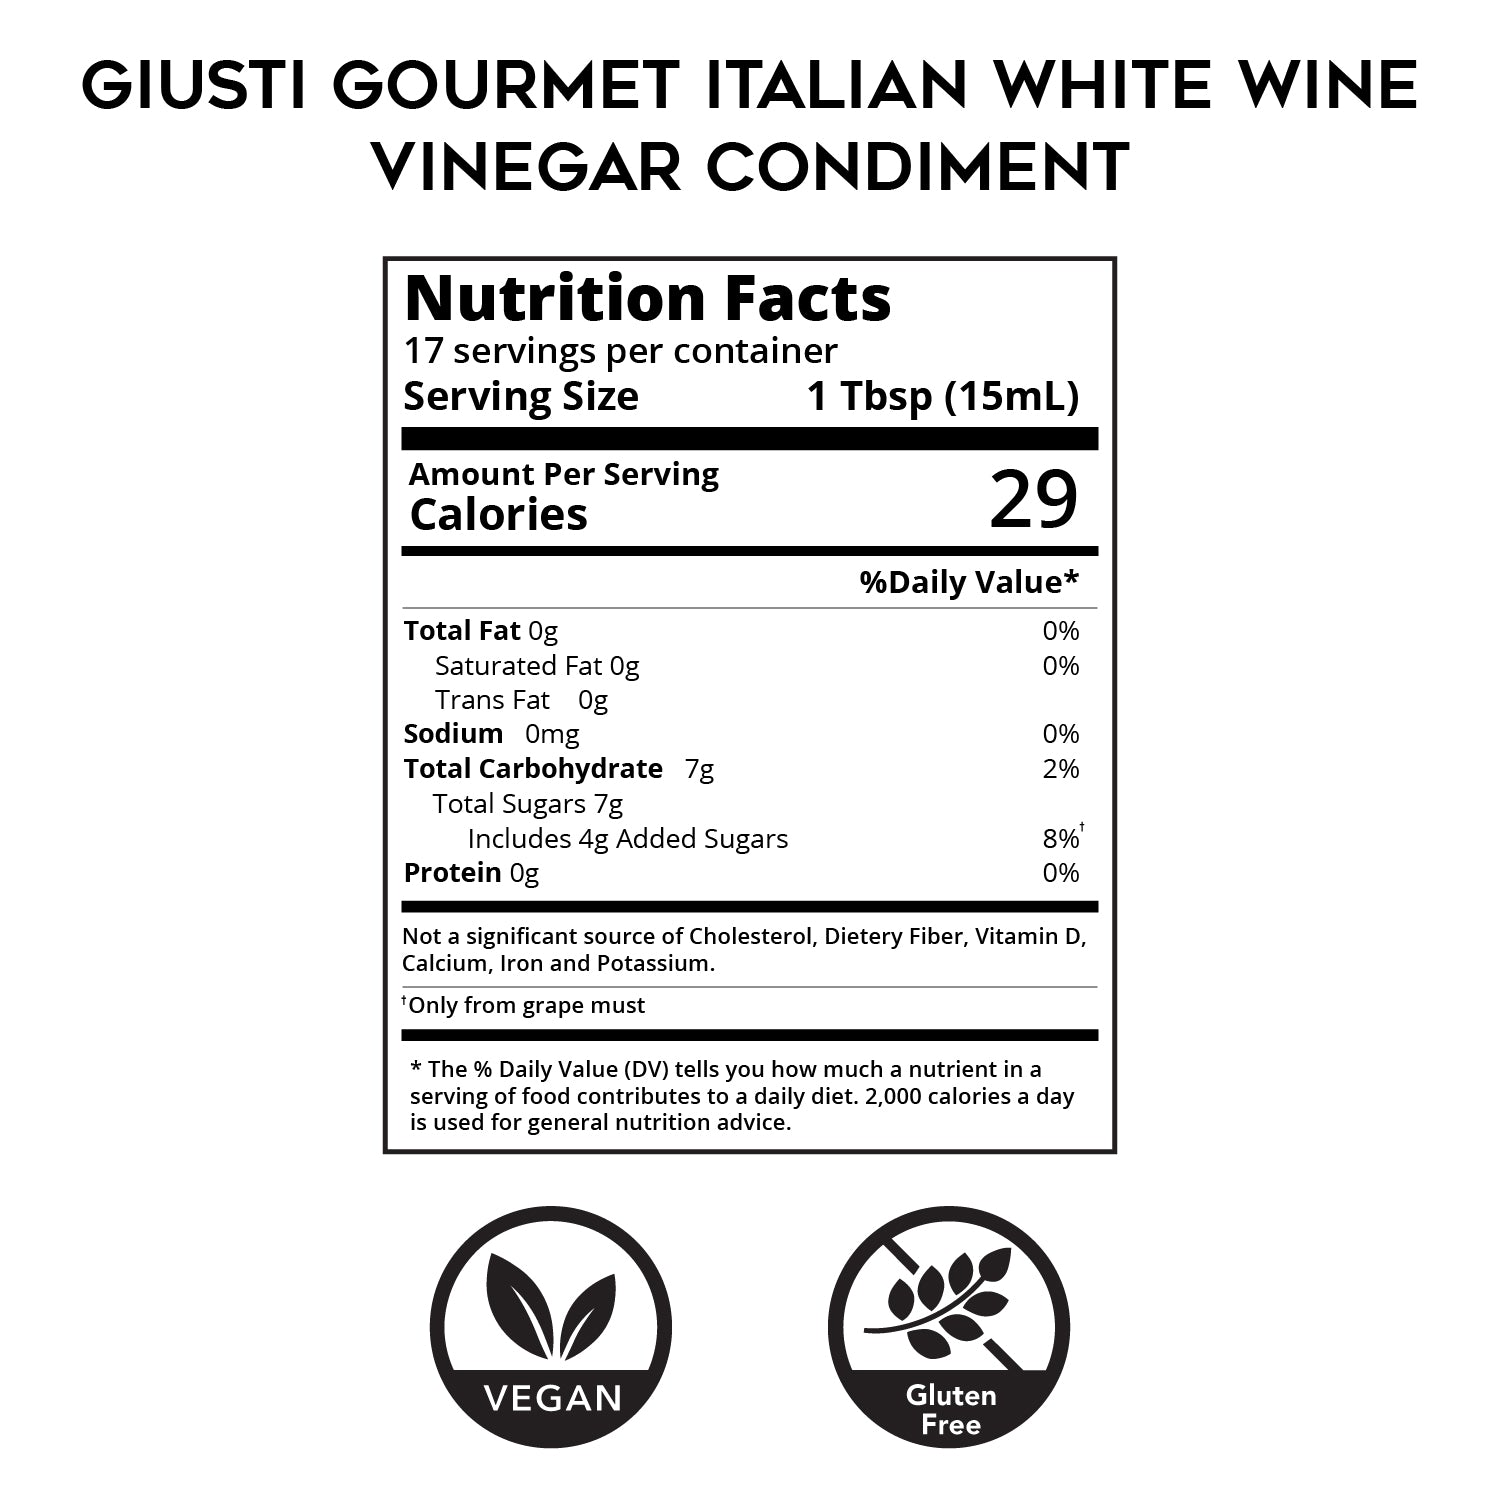 Gourmet Italian White Wine Vinegar Condiment by Giusti